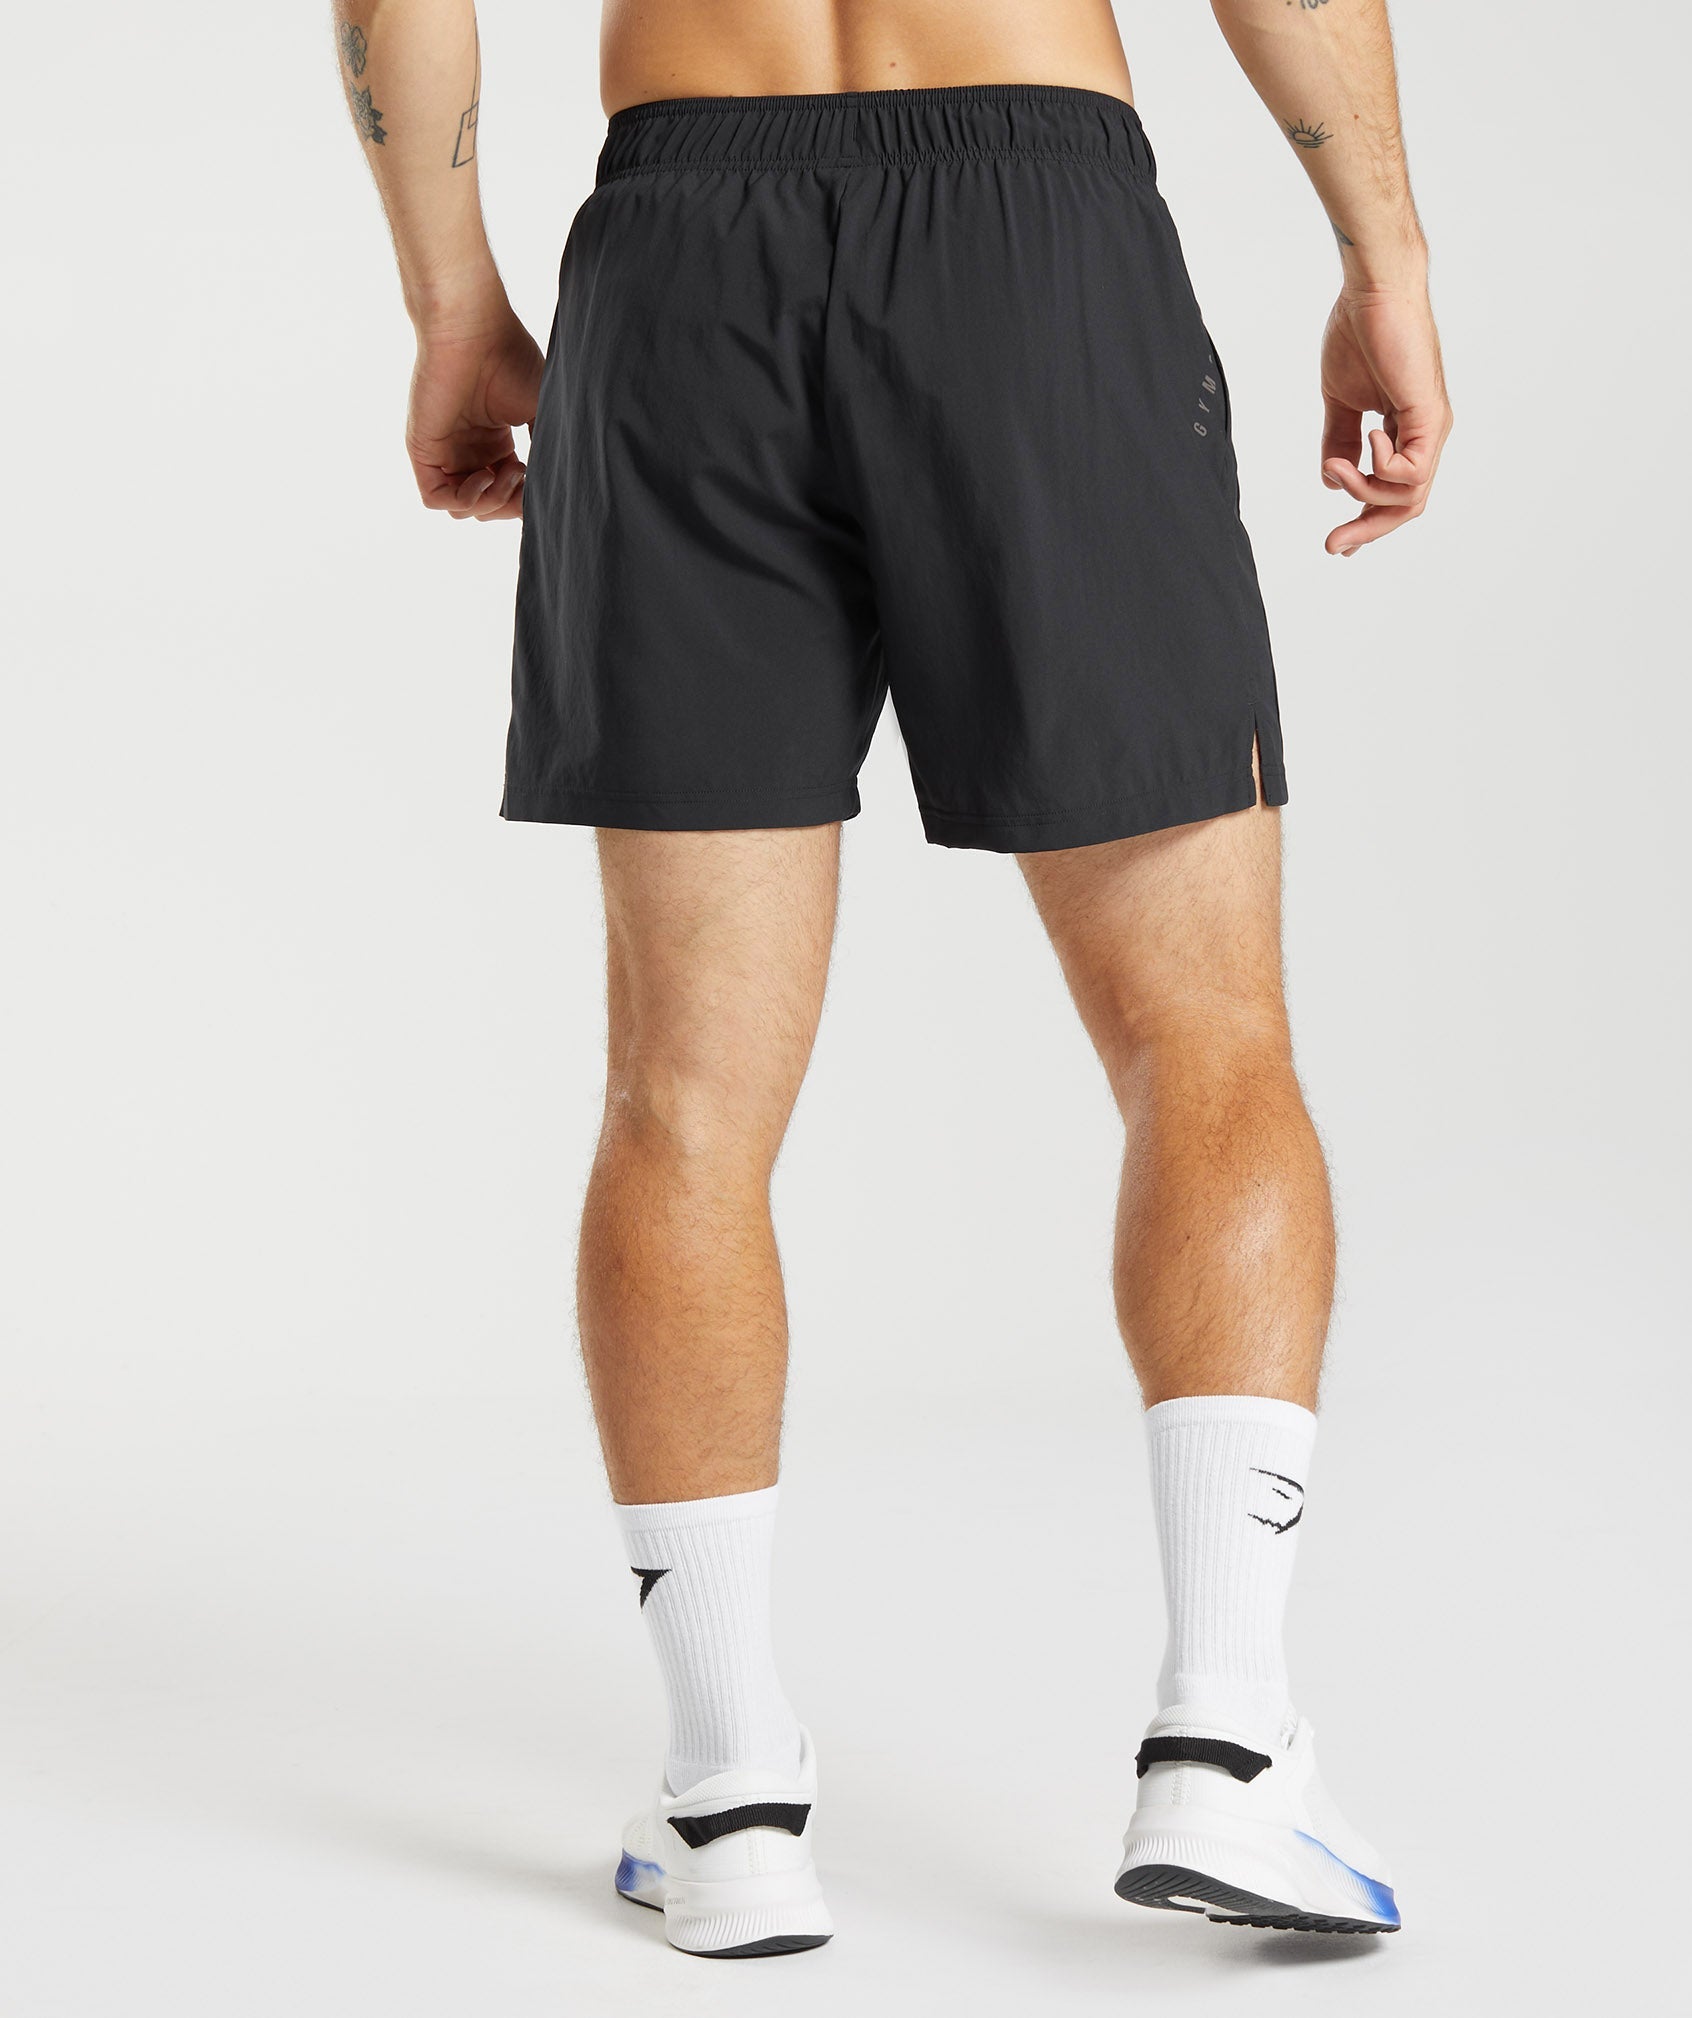 adidas Mens 3 Stripe Shorts with Zipper Pockets (Grey Six/Black